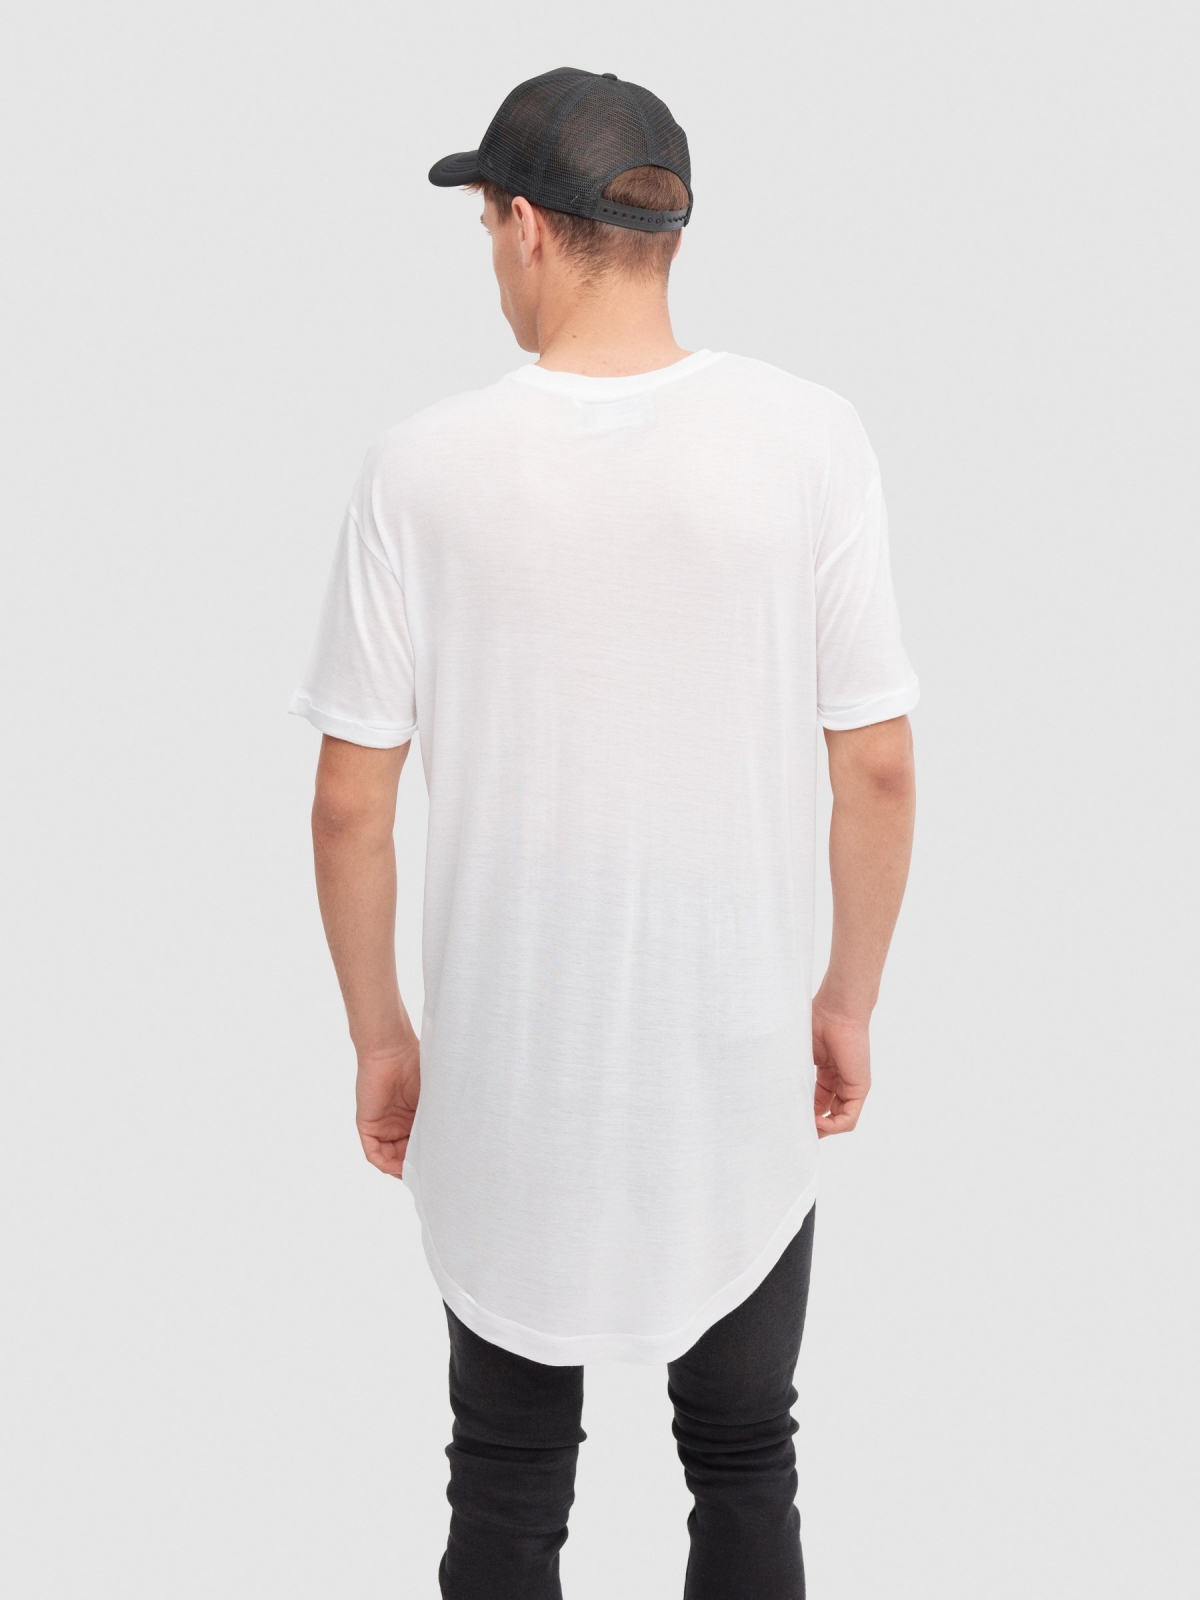 Camiseta larga básica blanco vista media trasera